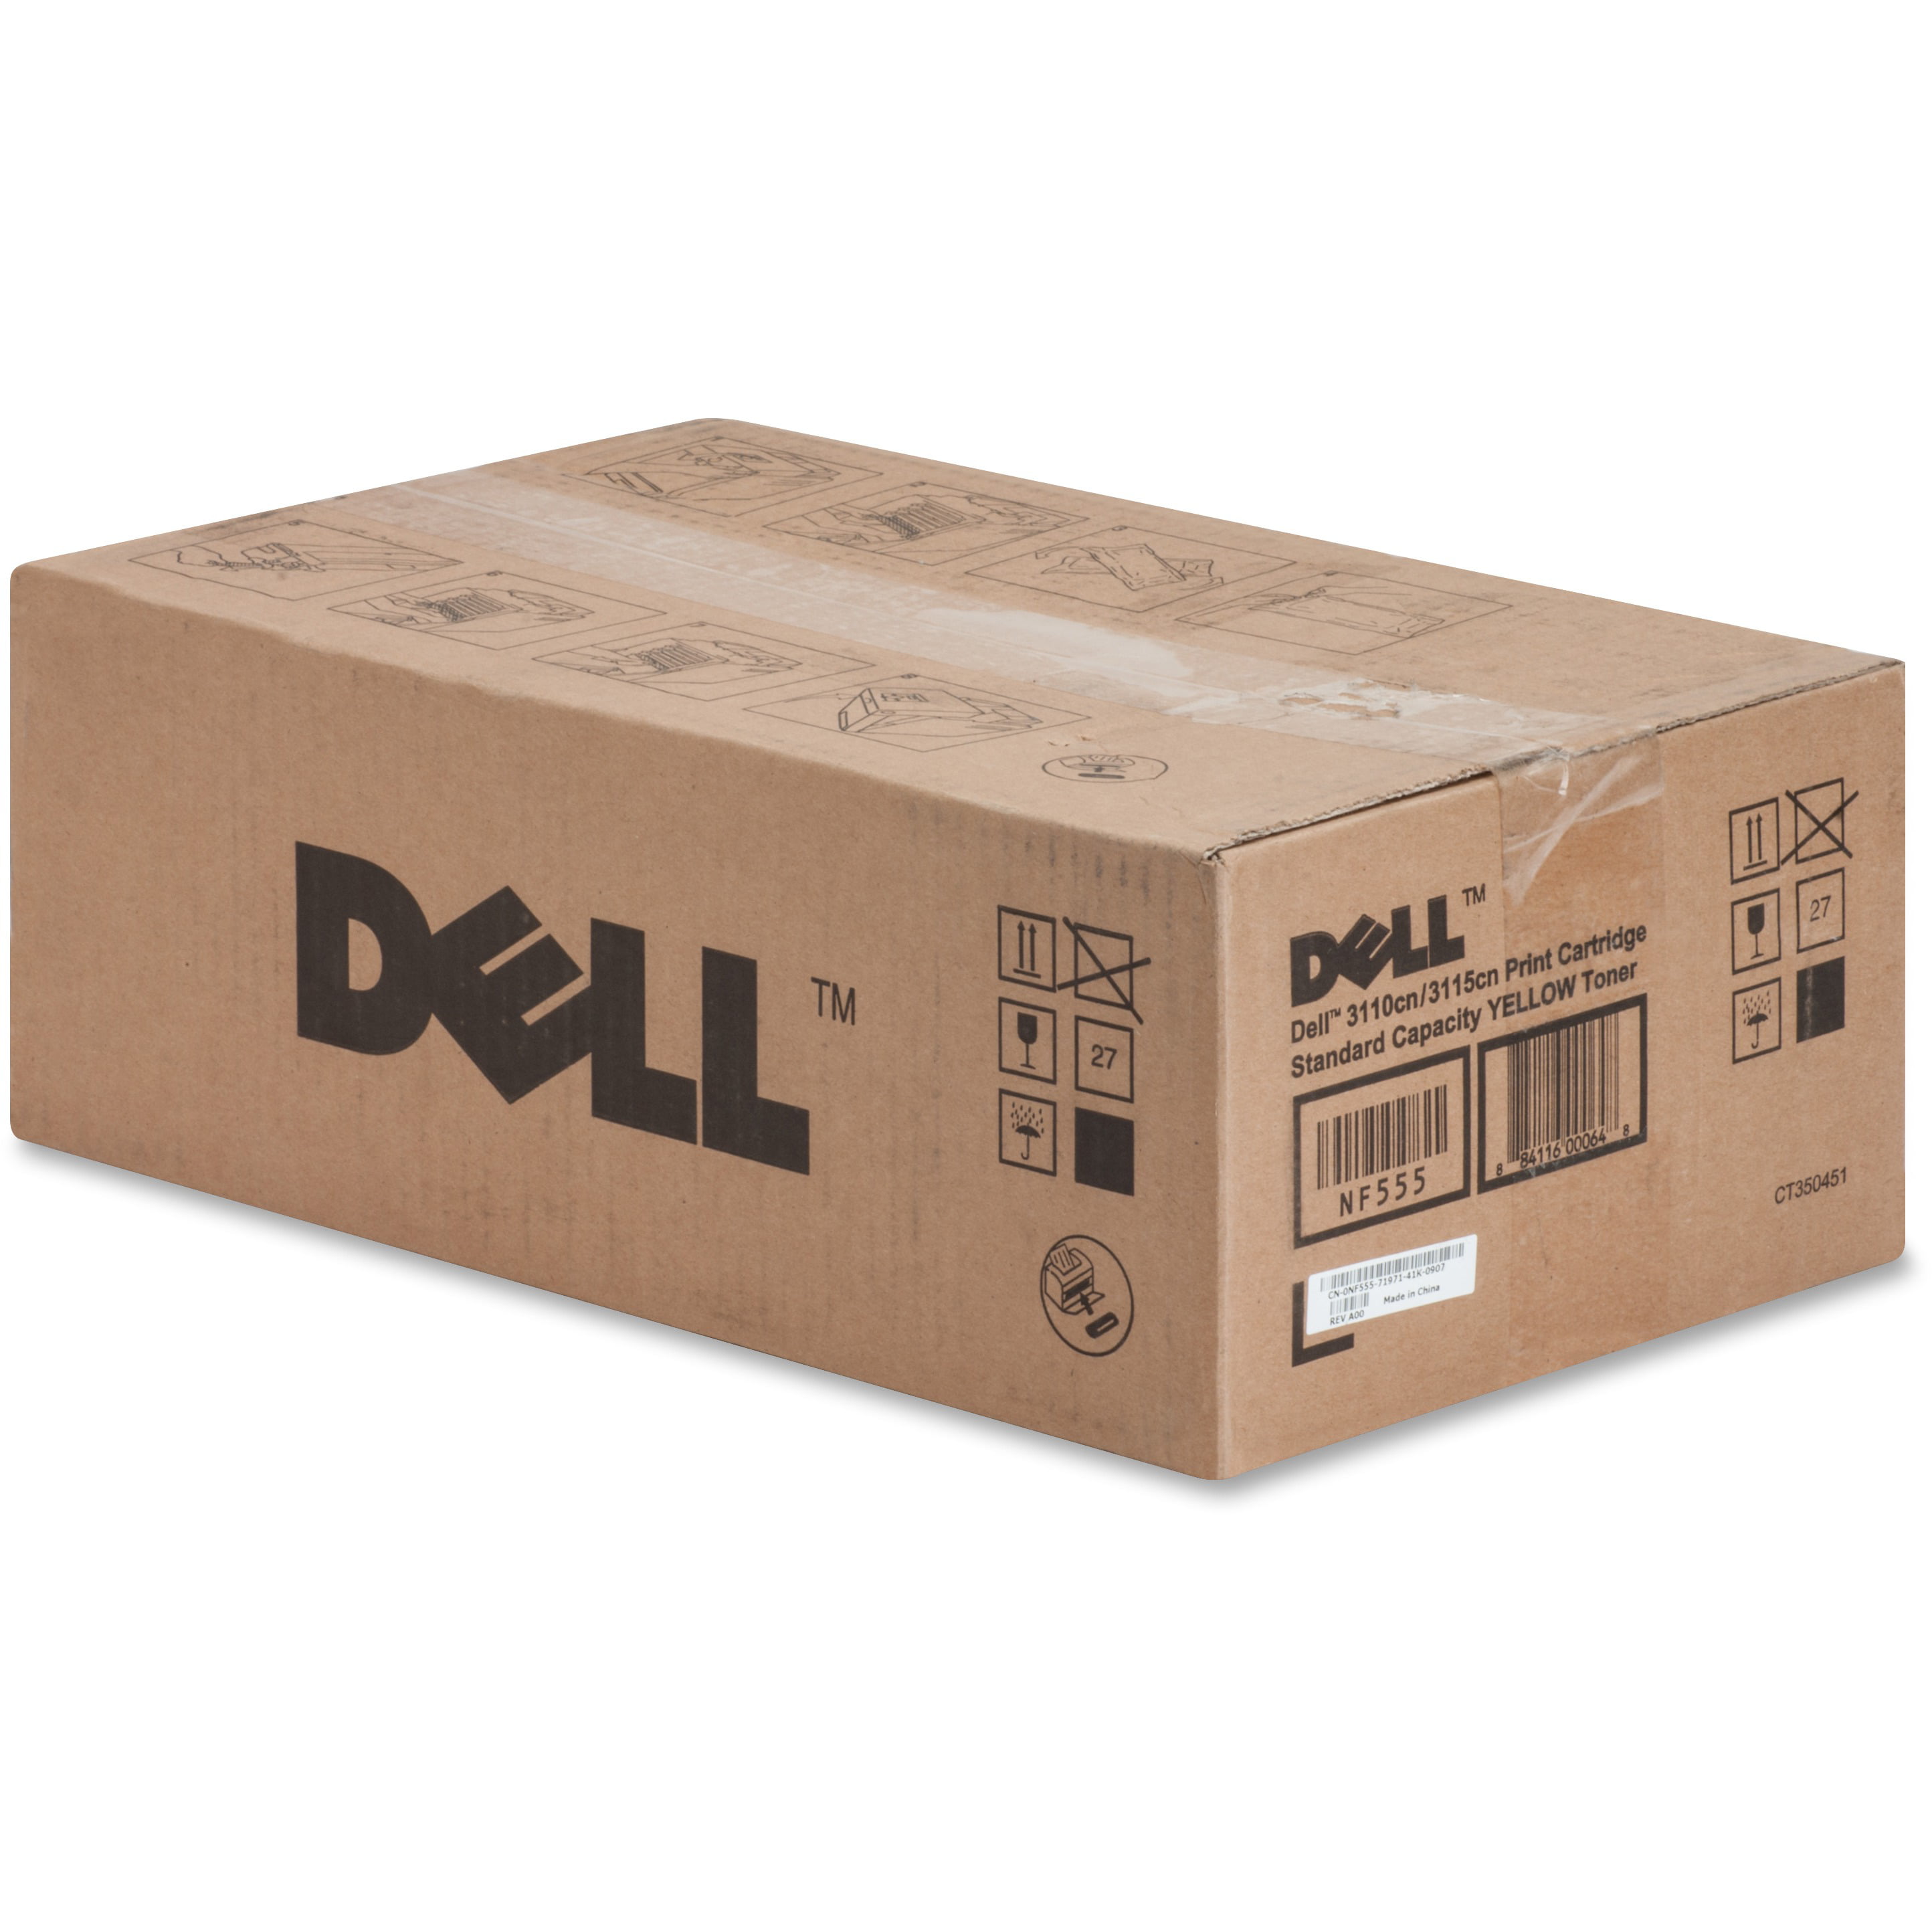 Dell, DLLNF555, 3110cn/3115cn Standard-yield Toner Cartridge, 1 